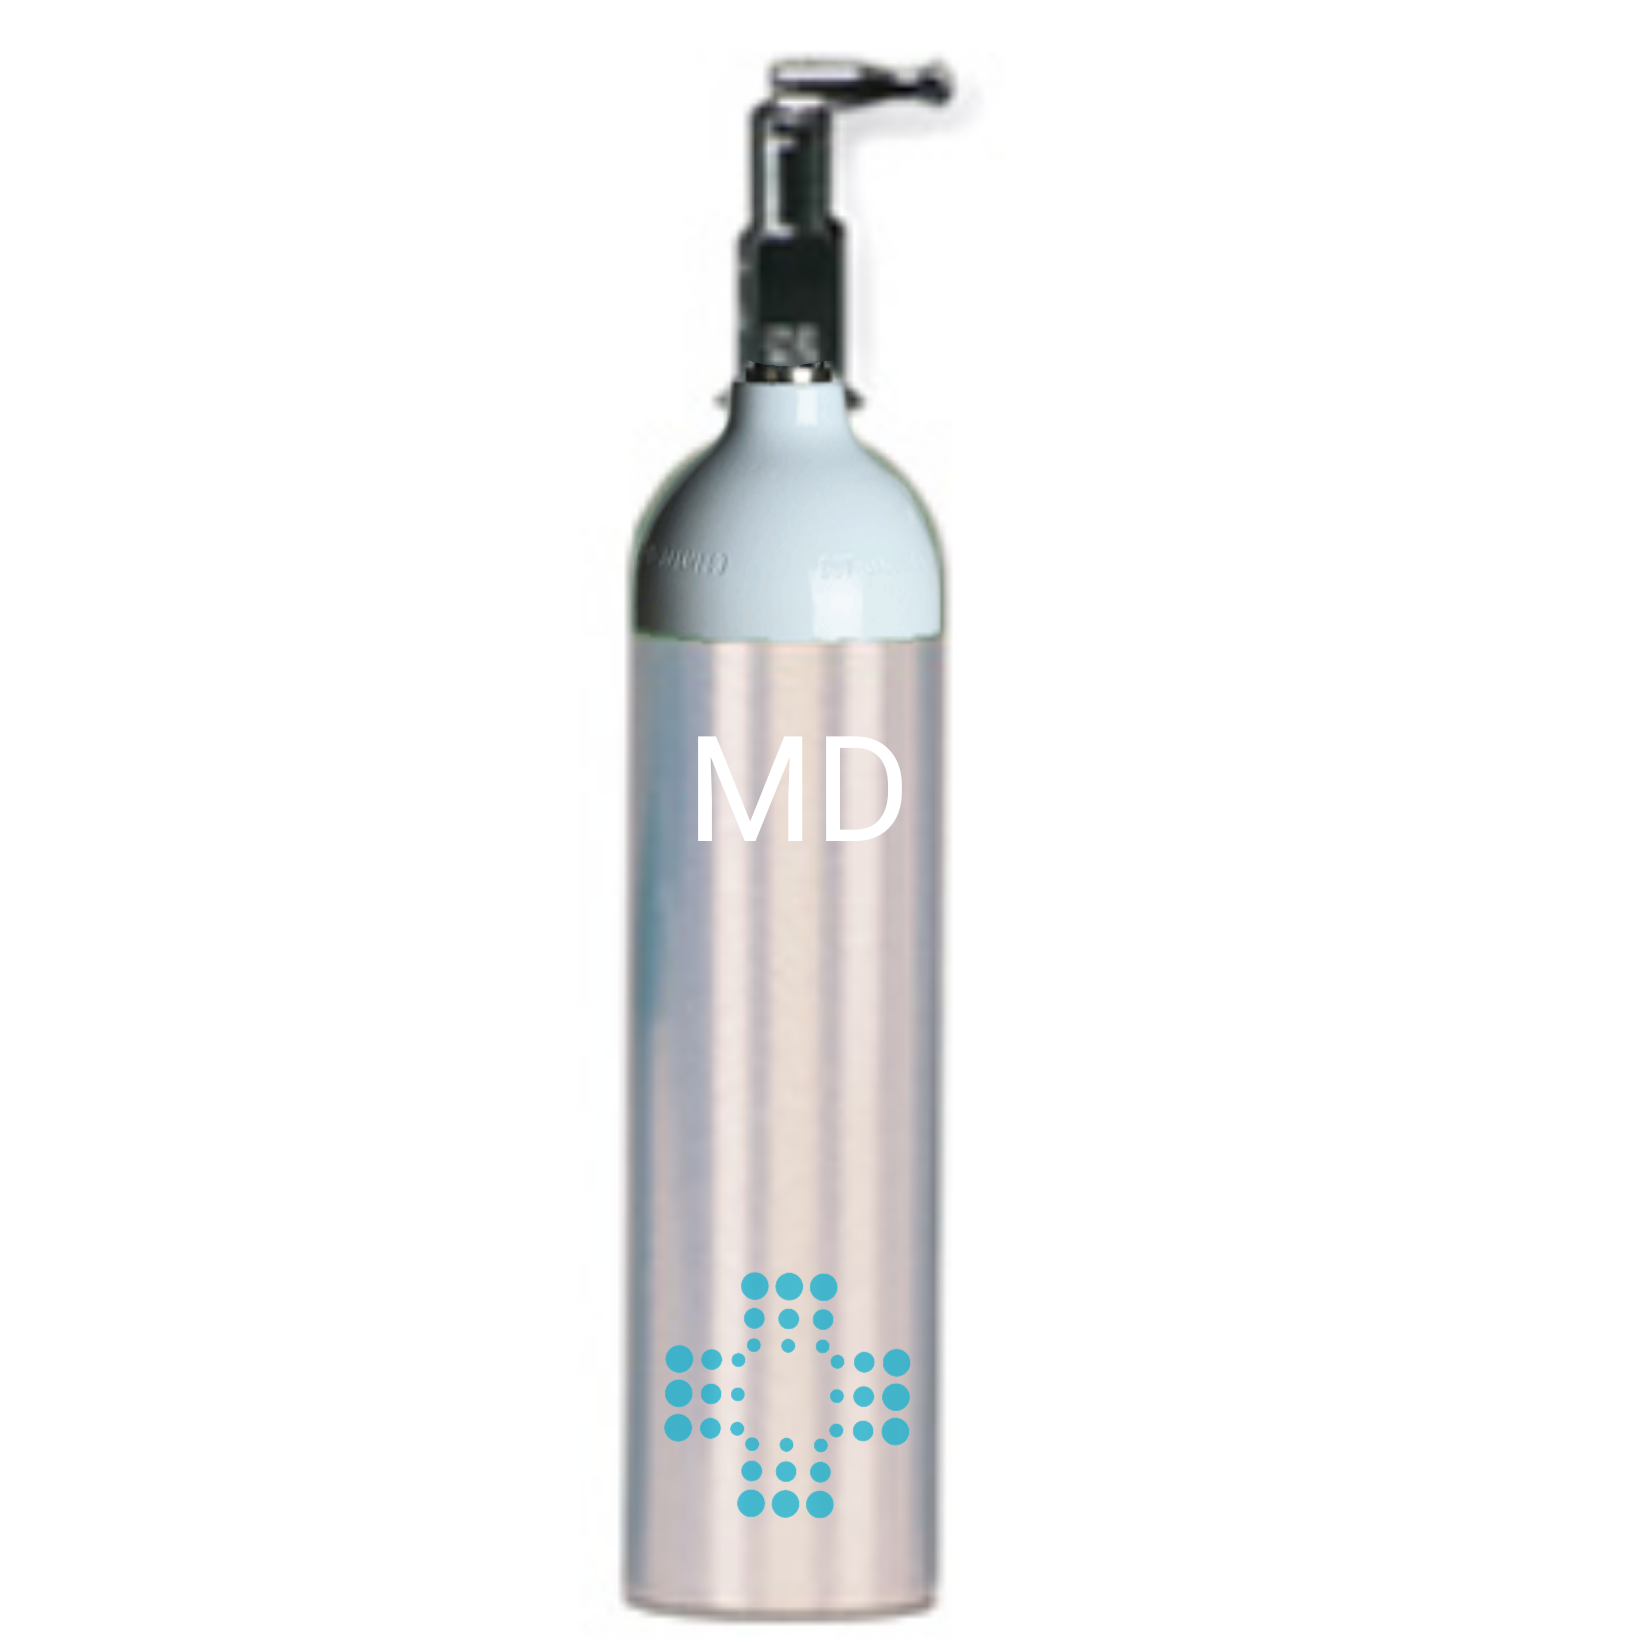 MD oxygen tank cylinder